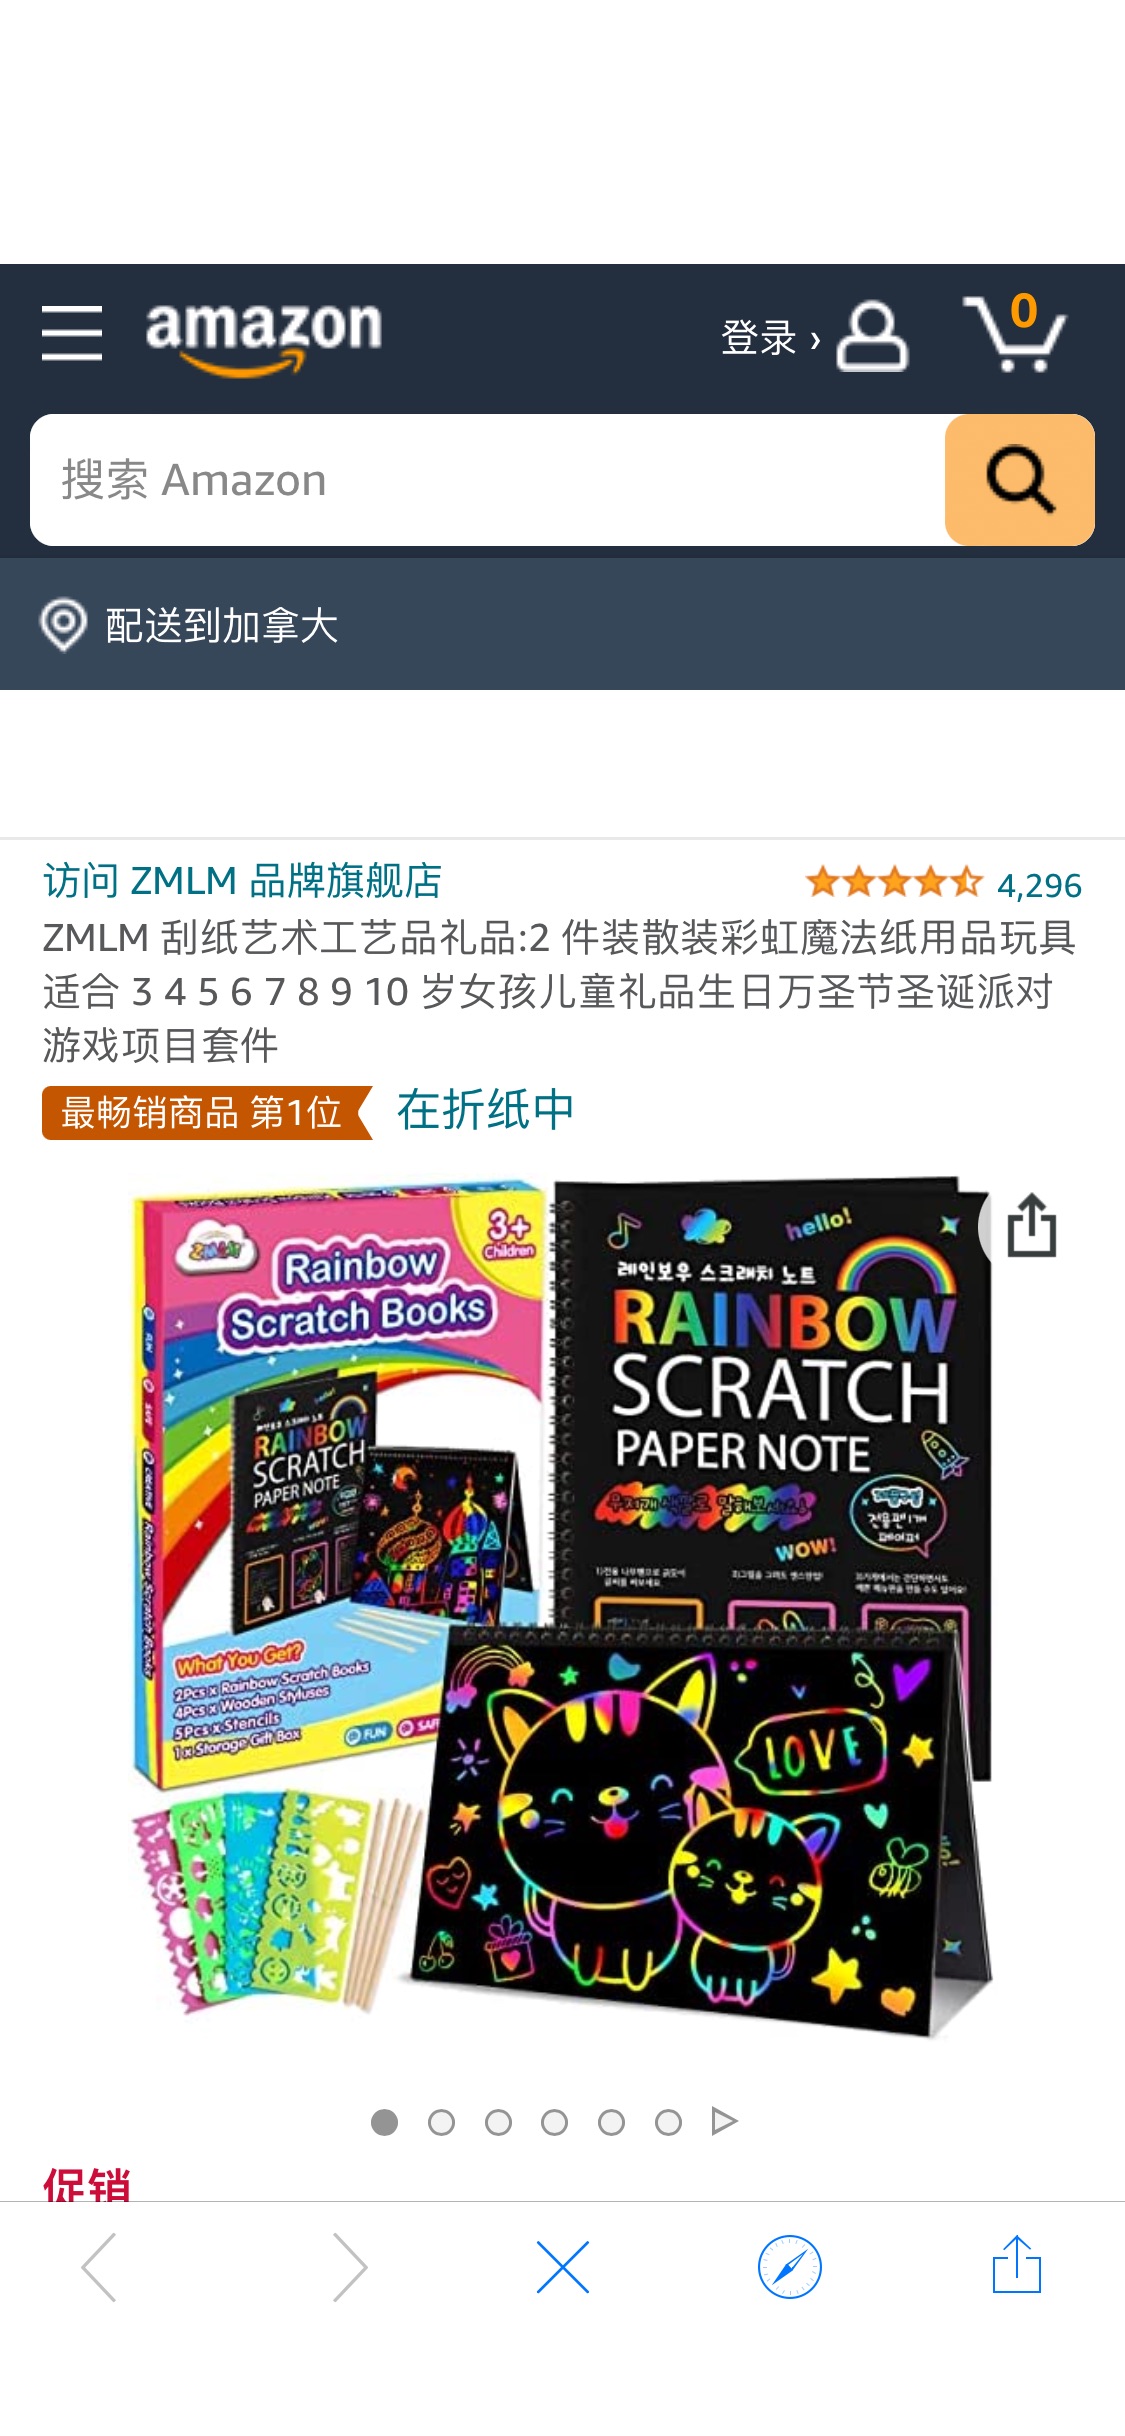 Amazon.com: ZMLM 刮纸艺术工艺品礼品:2 件装散装彩虹魔法纸用品玩具适合 3 4 5 6 7 8 9 10 岁女孩儿童礼品生日万圣节圣诞派对游戏项目套件 : 玩具和游戏